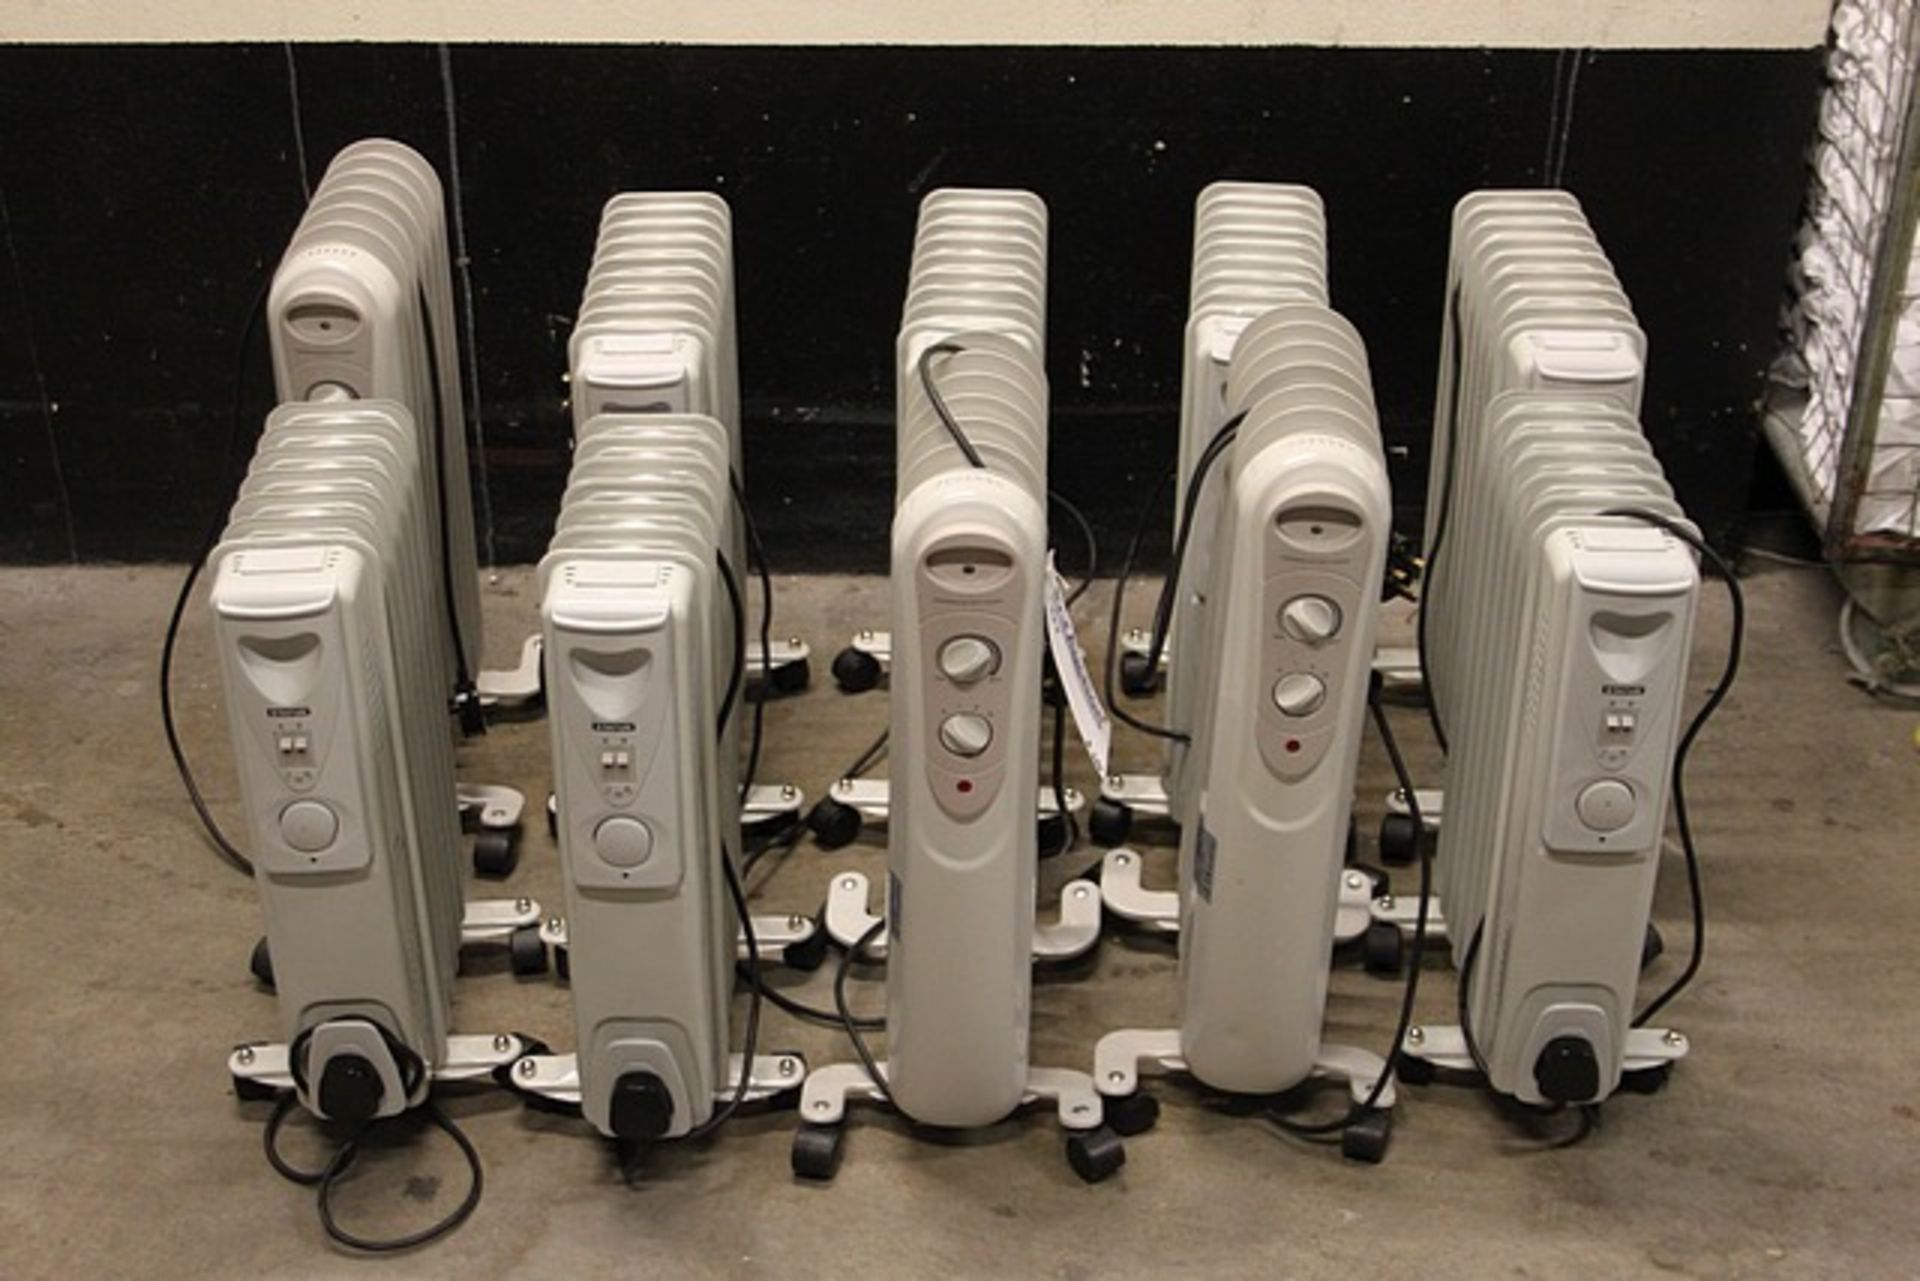 10 x mobile radiators 240v single phase